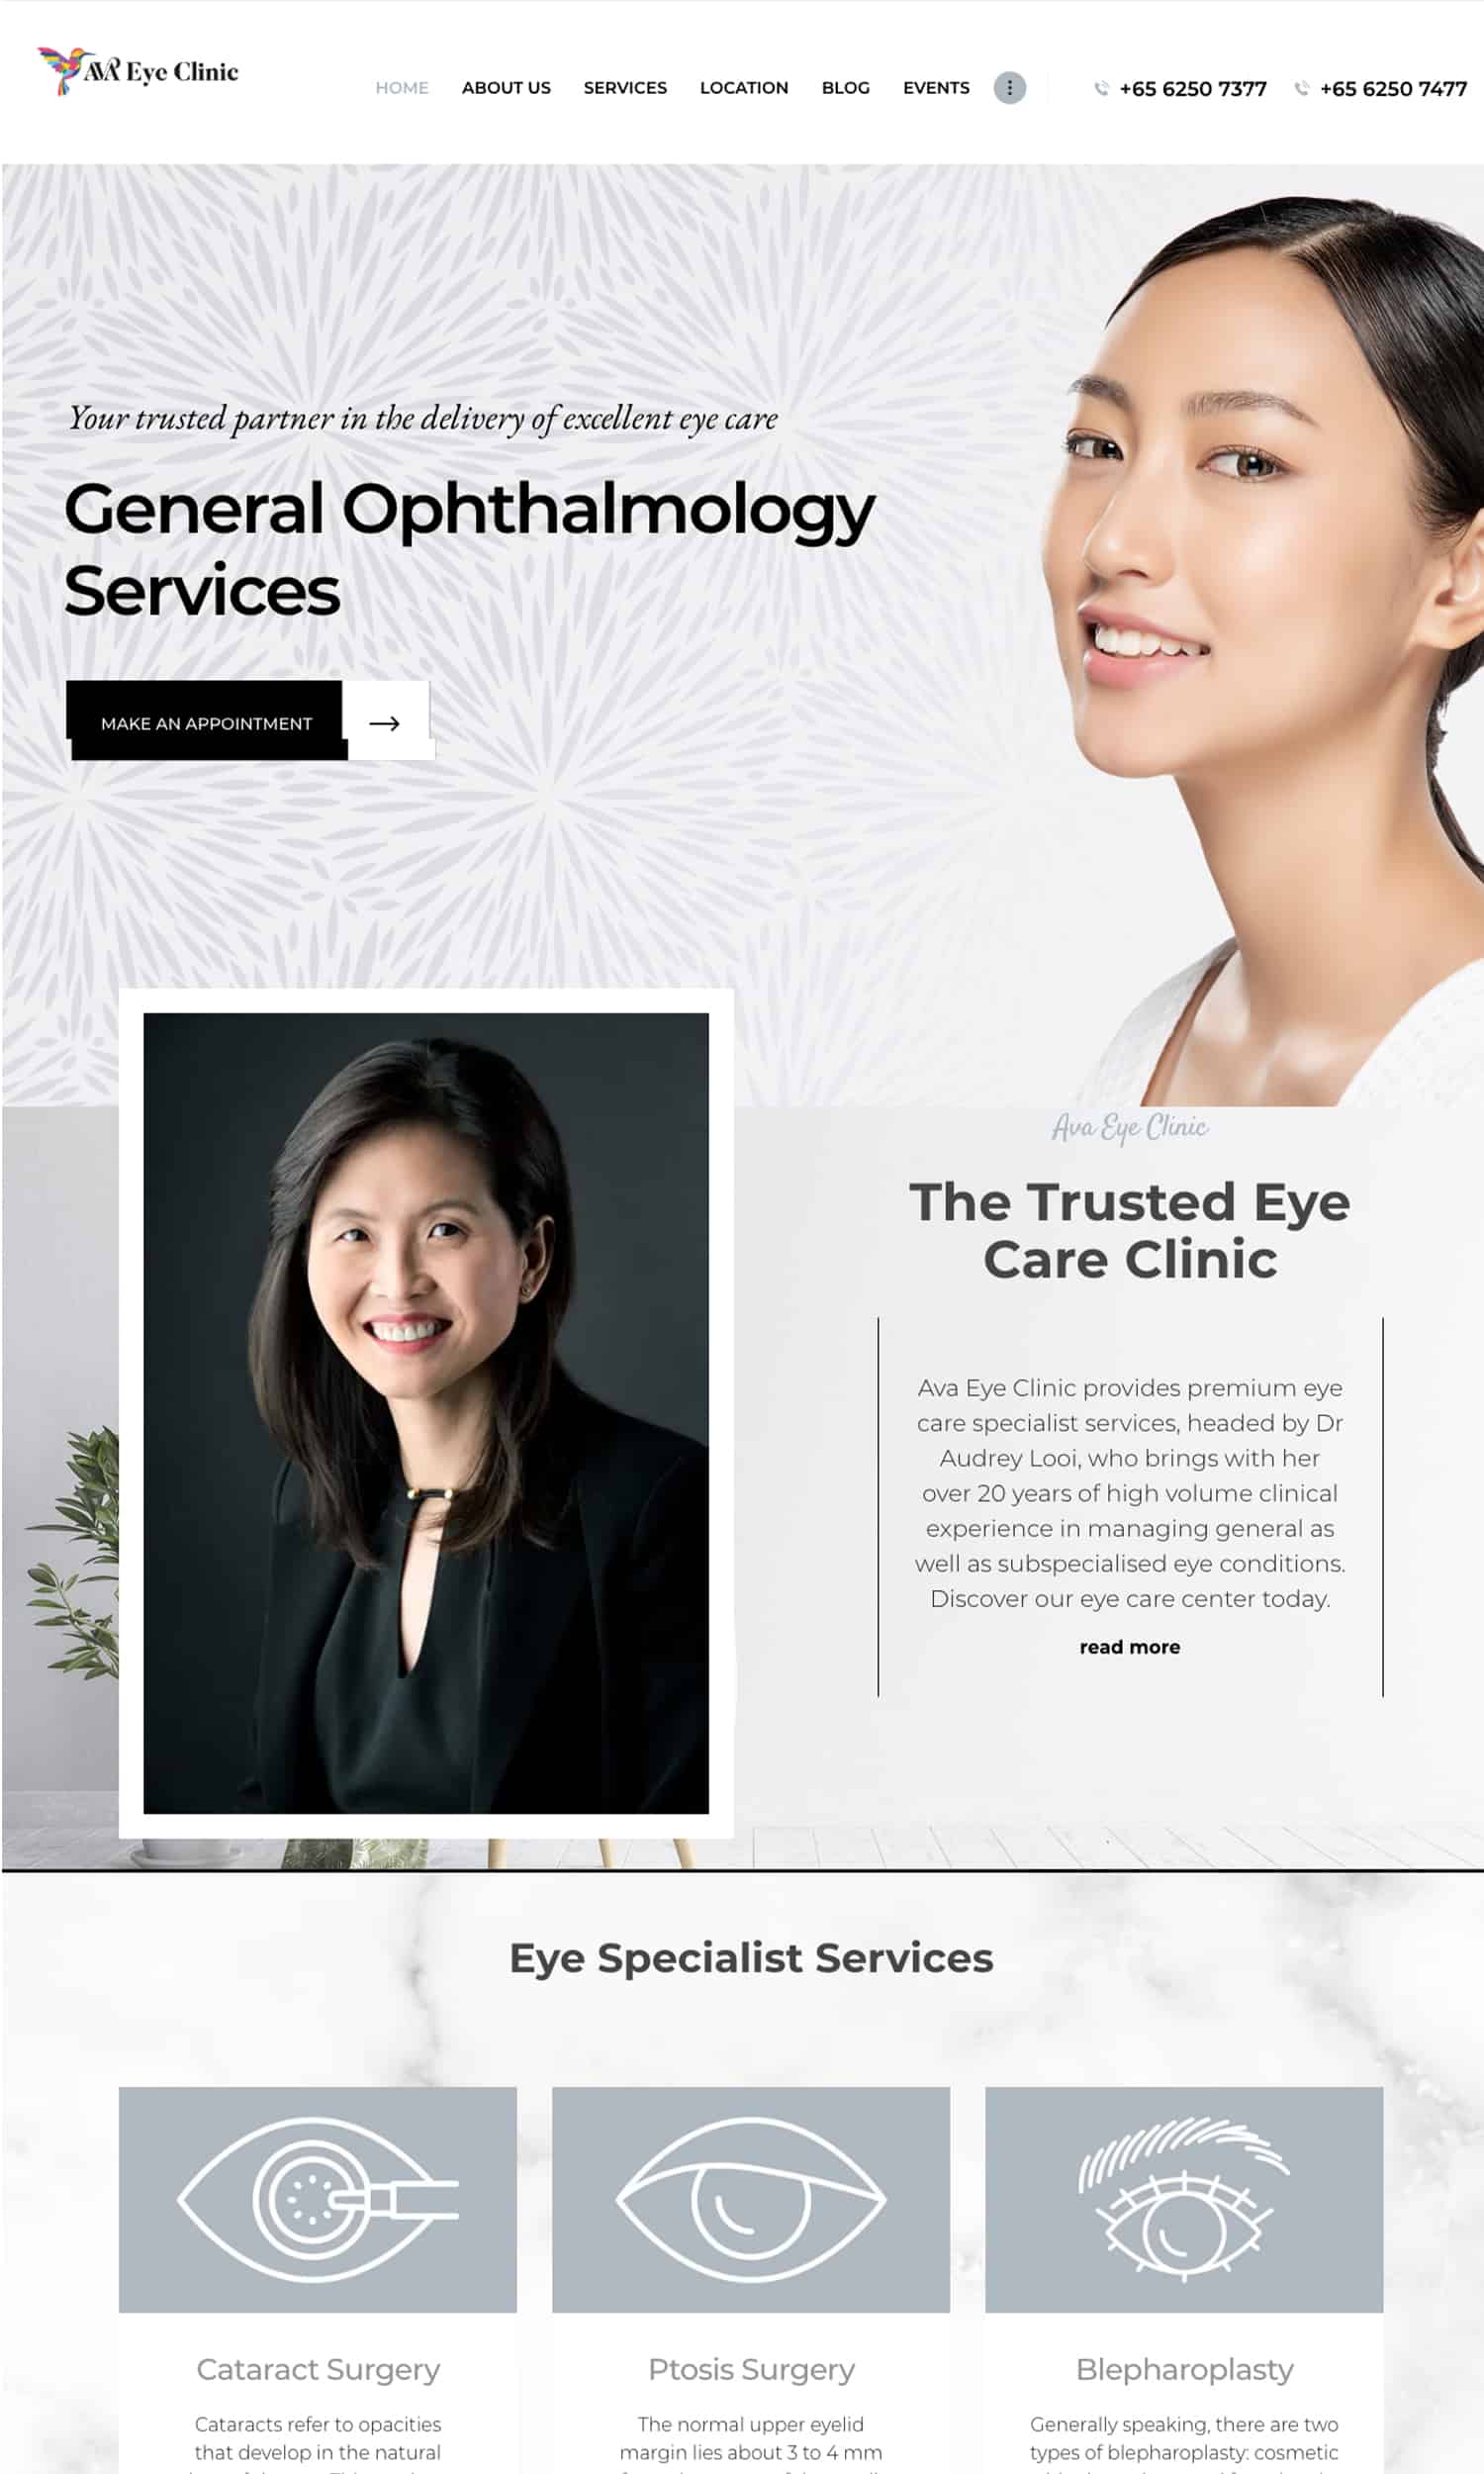 Ava Eye Clinic Page 1